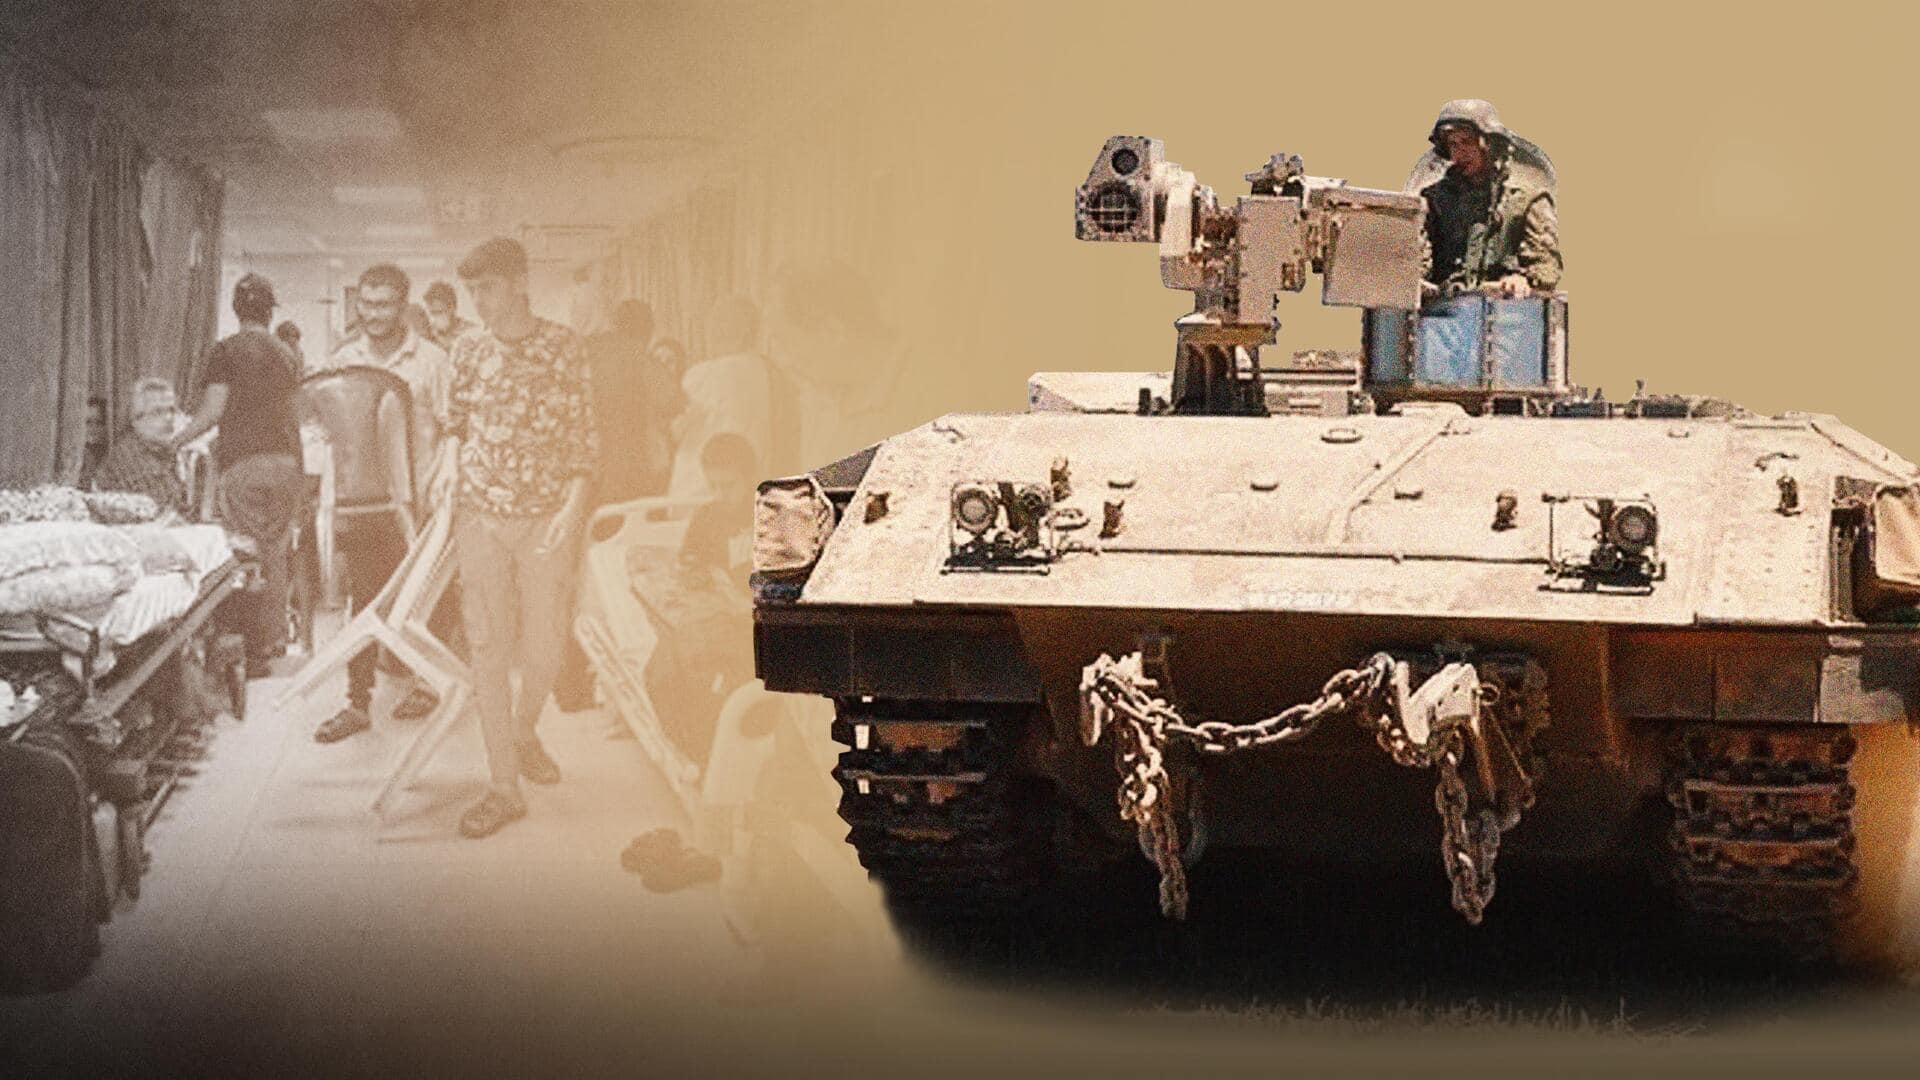 Israel tanks enter Gaza's Al-Shifa Hospital, patients stranded